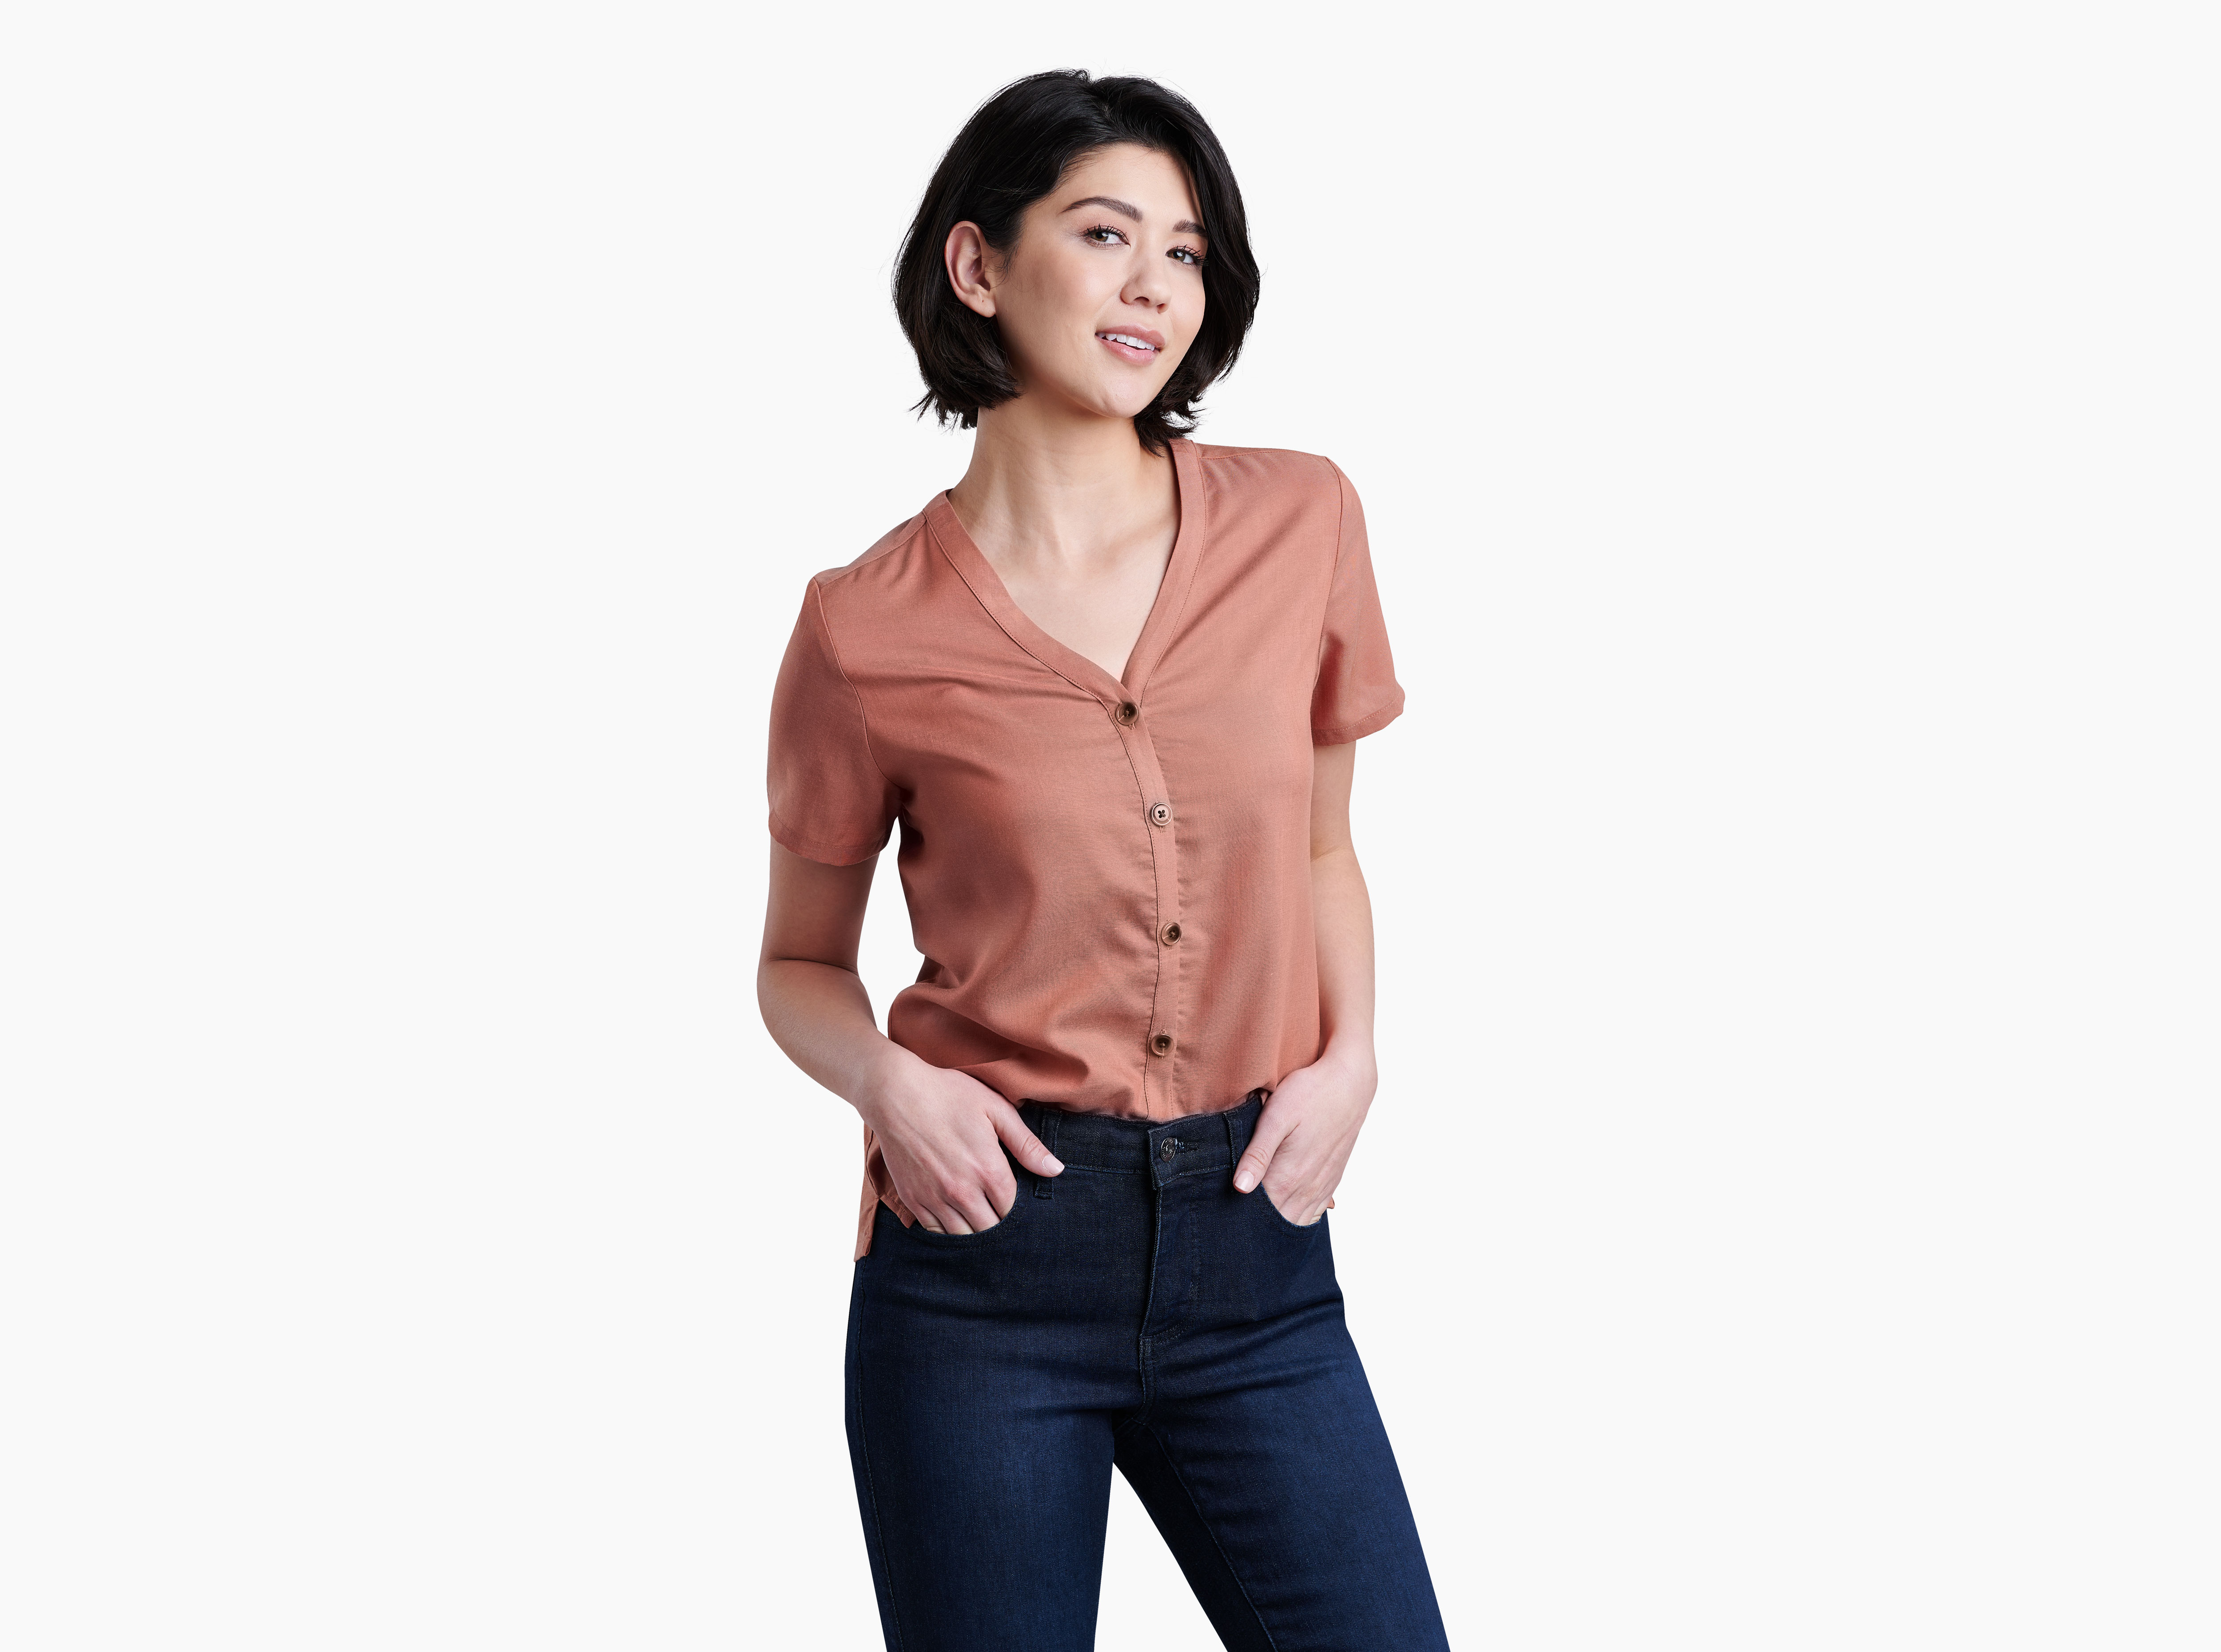 KUHL Women's Hadley Long Sleeve Shirt - Great Outdoor Shop